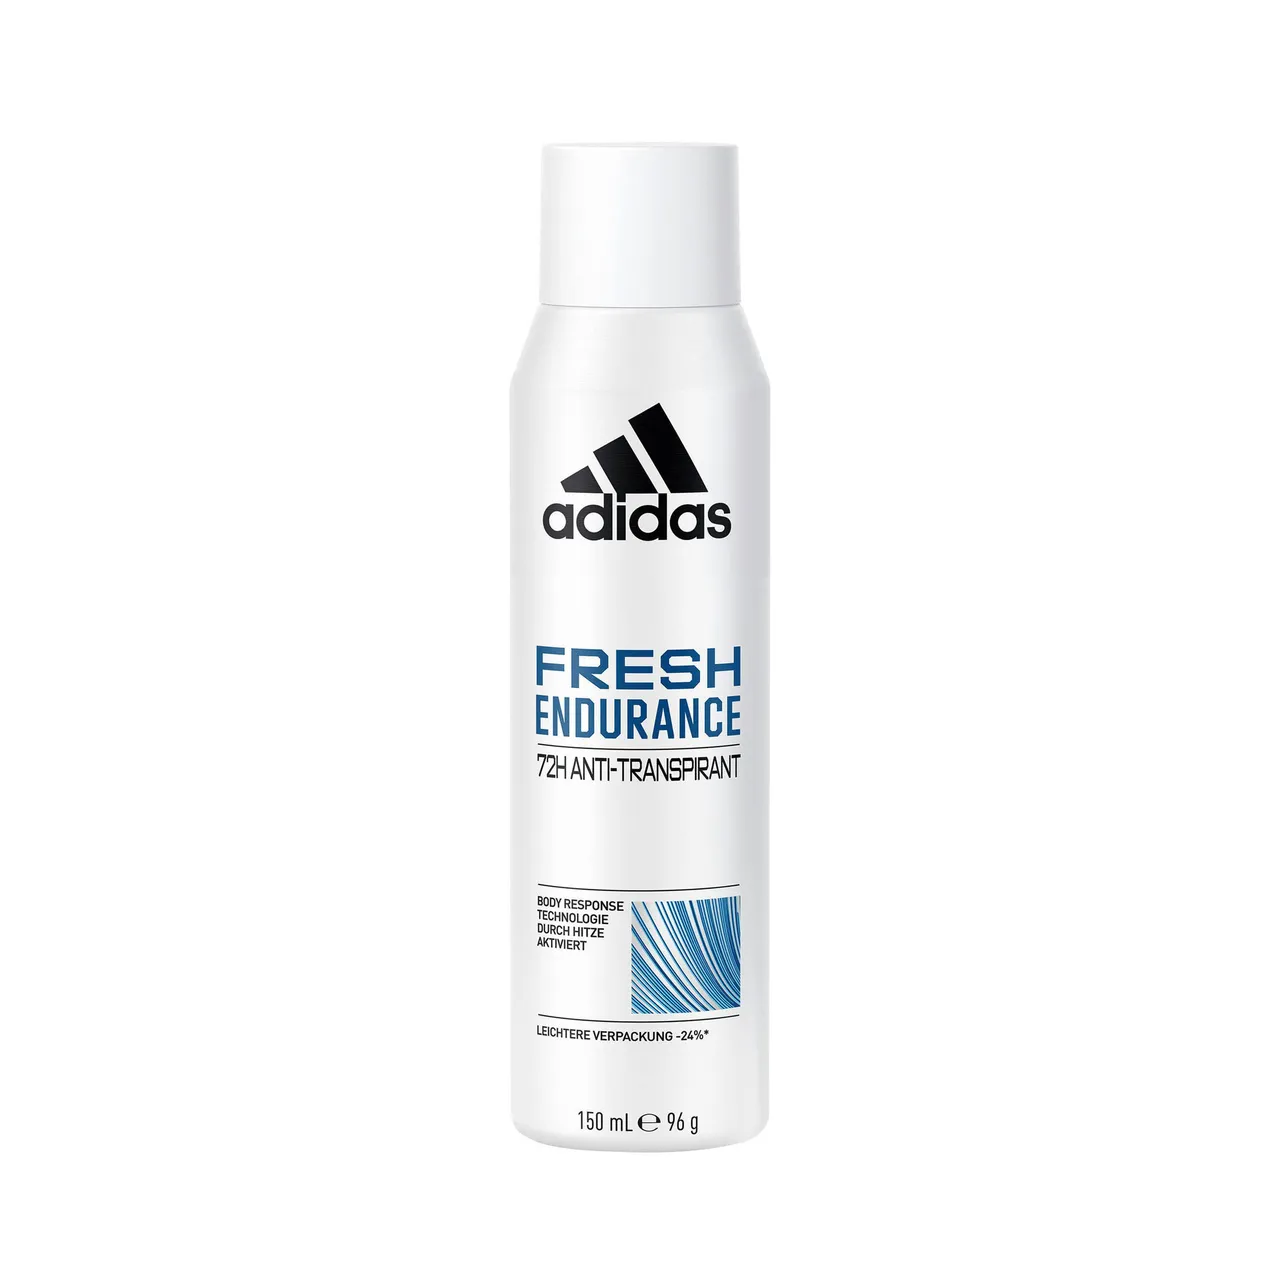 adidas Fresh Endurance Anti-transpirant-Spray für sie